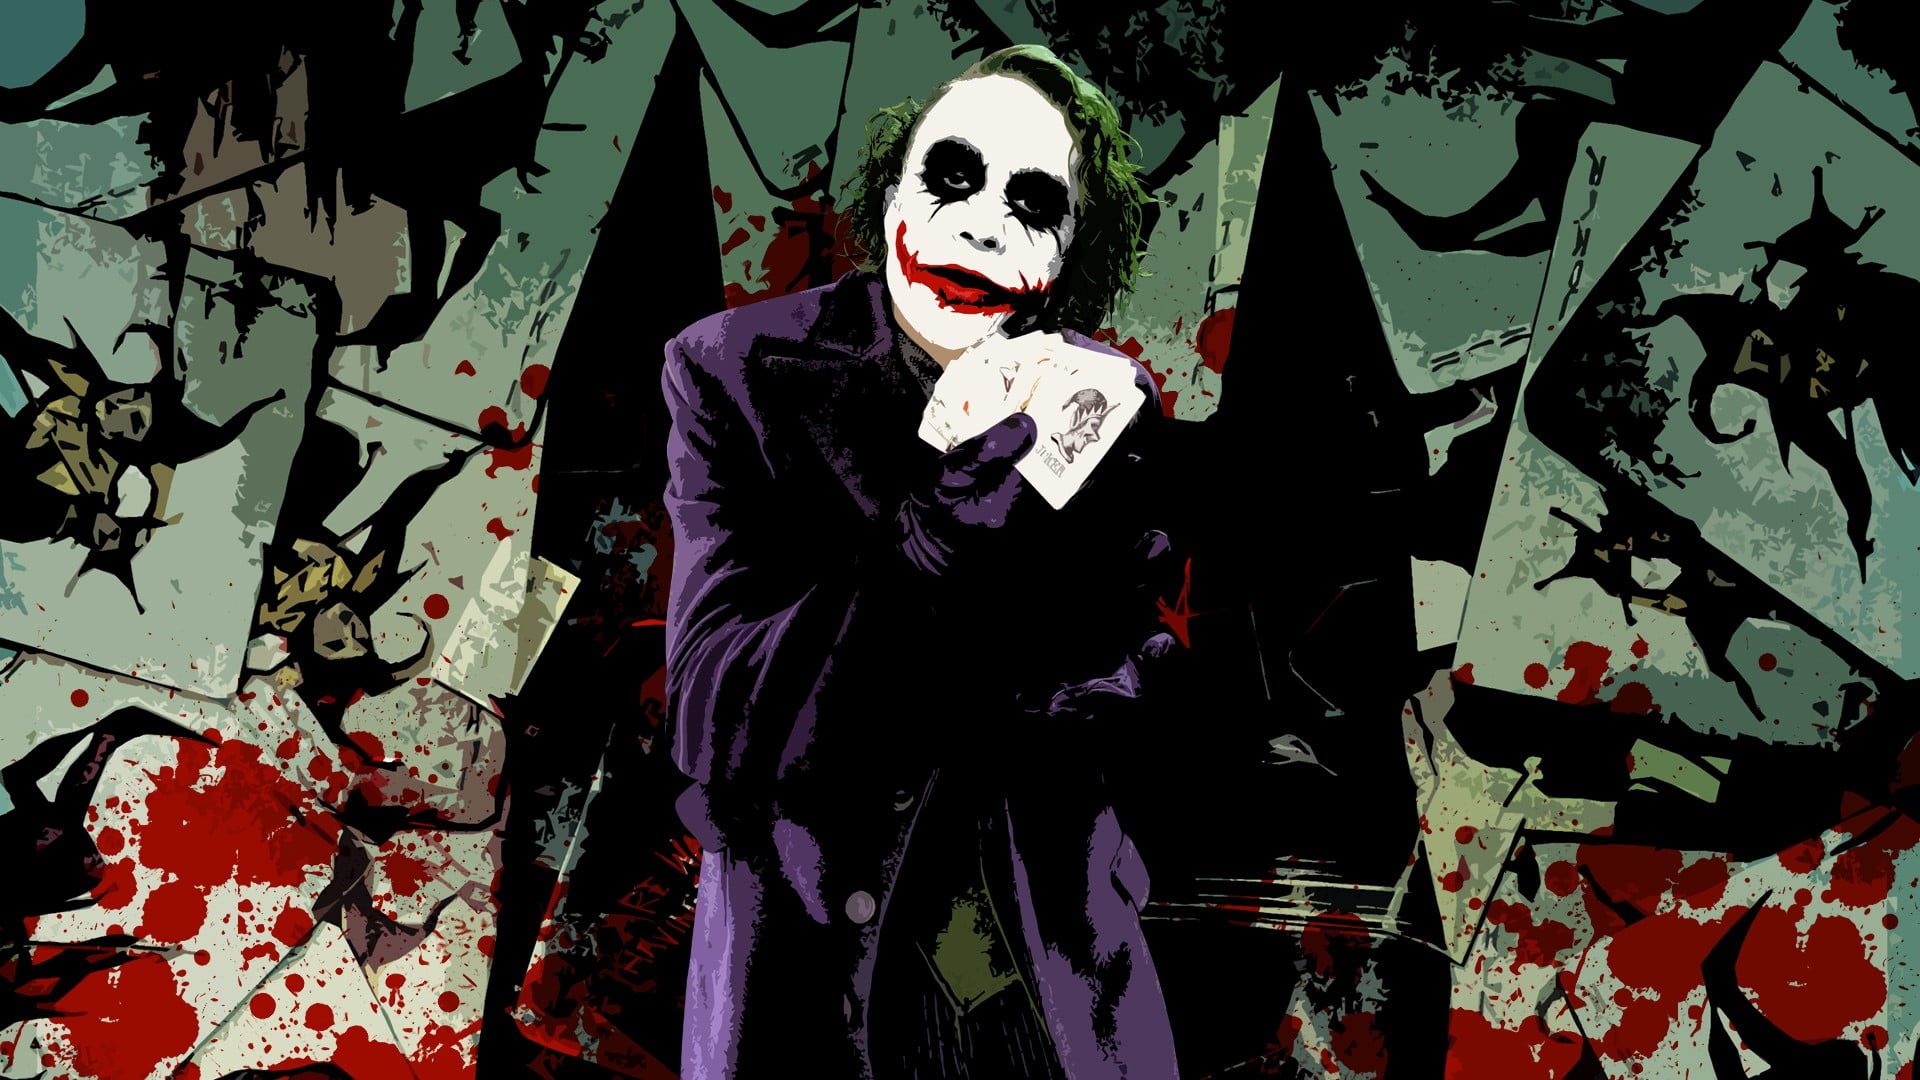 1920x1080 resolution | The Joker painting, movies, Batman, The Dark ...